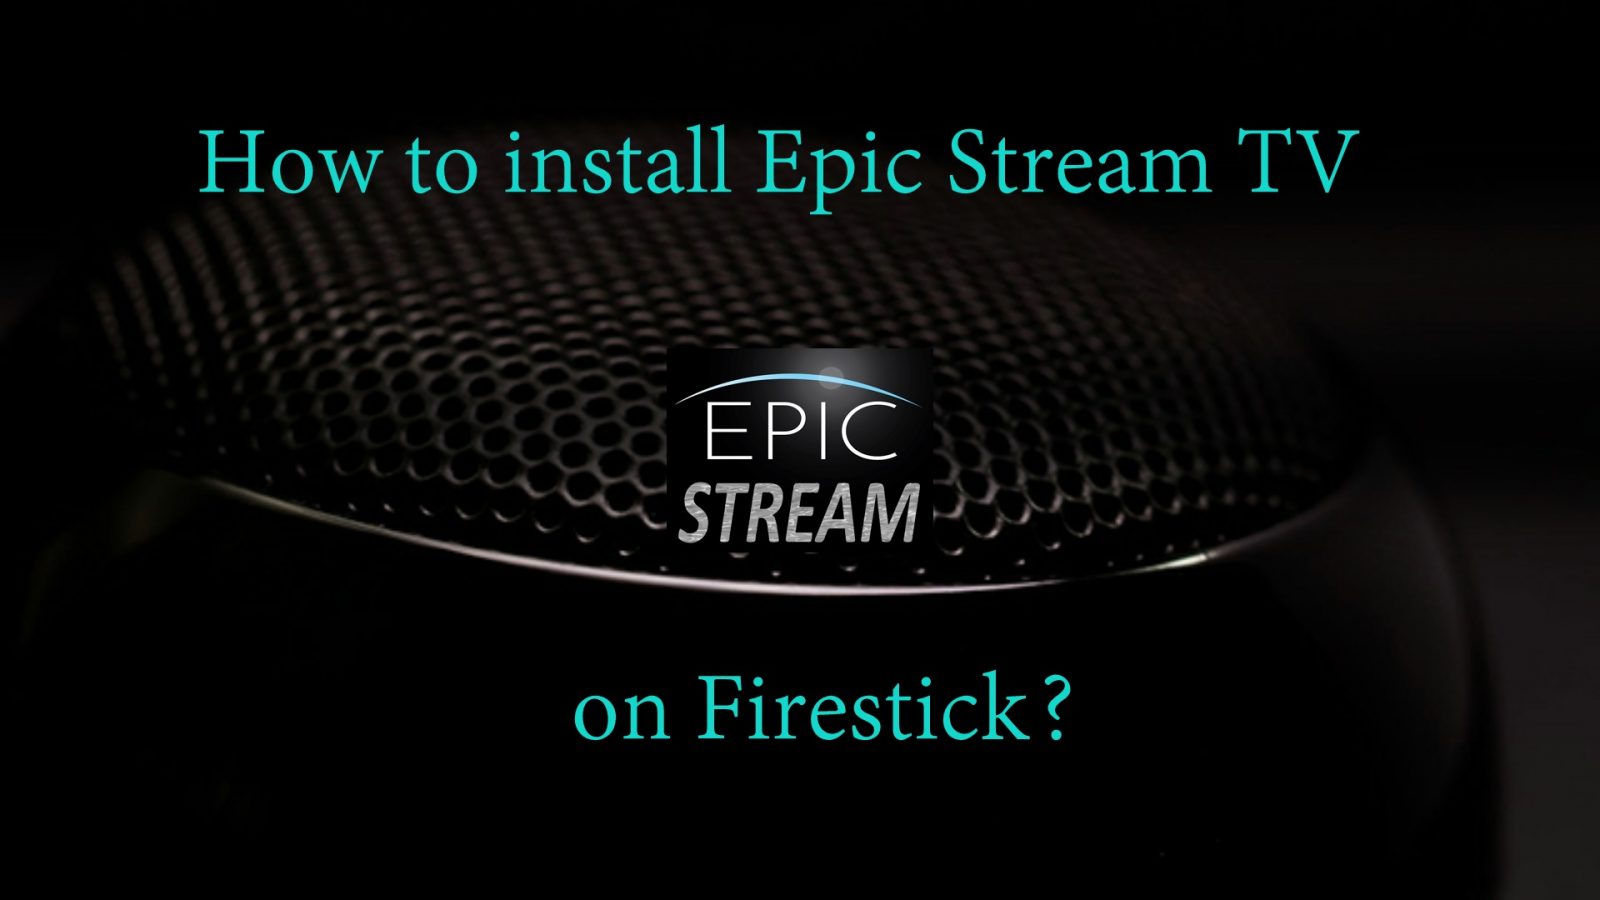 Epic Stream TV on Firestick